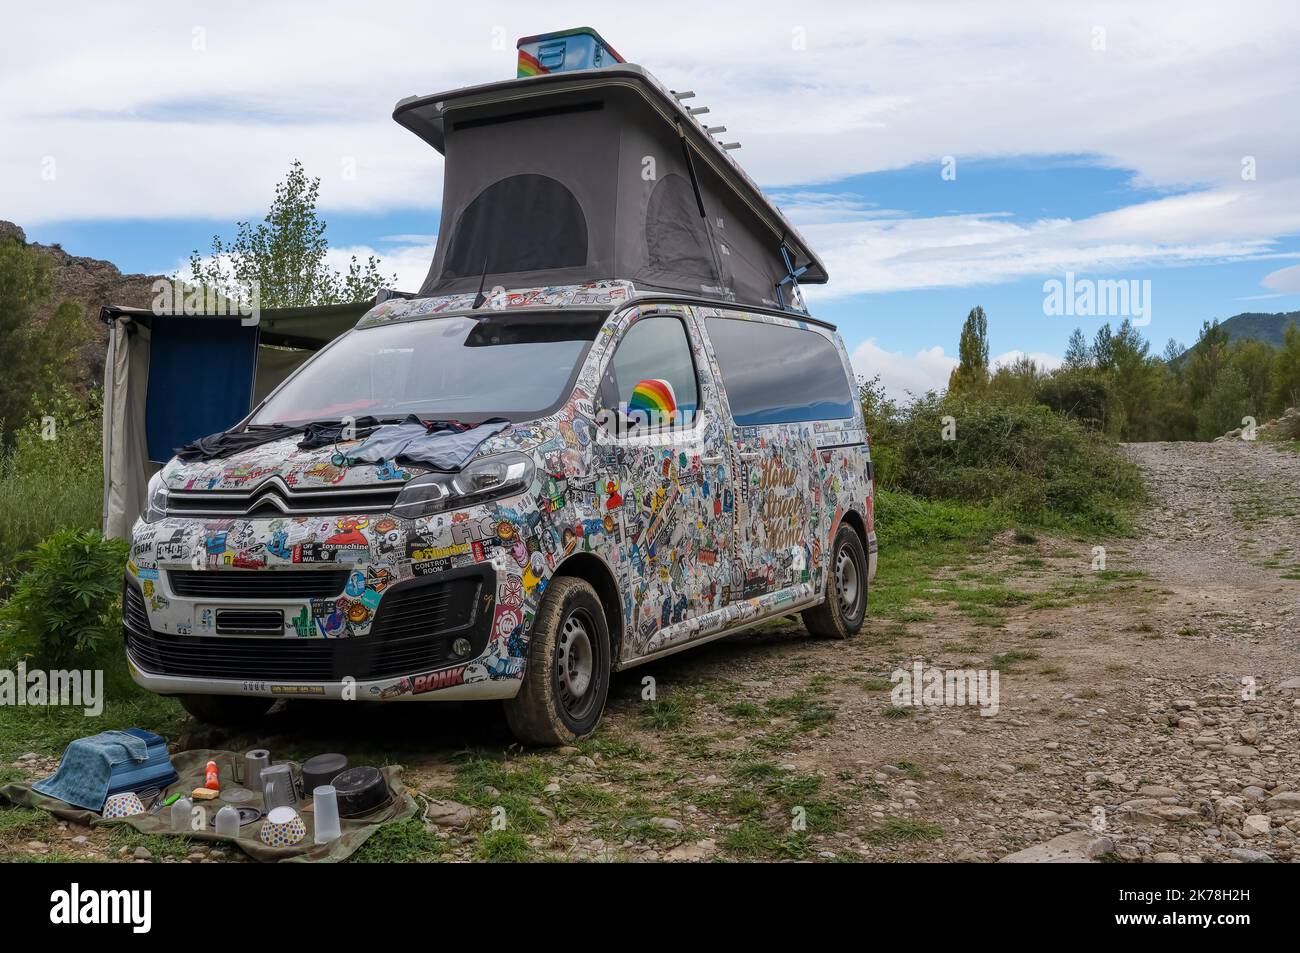 Kit sticker Bavaria autocollant camping car caravane